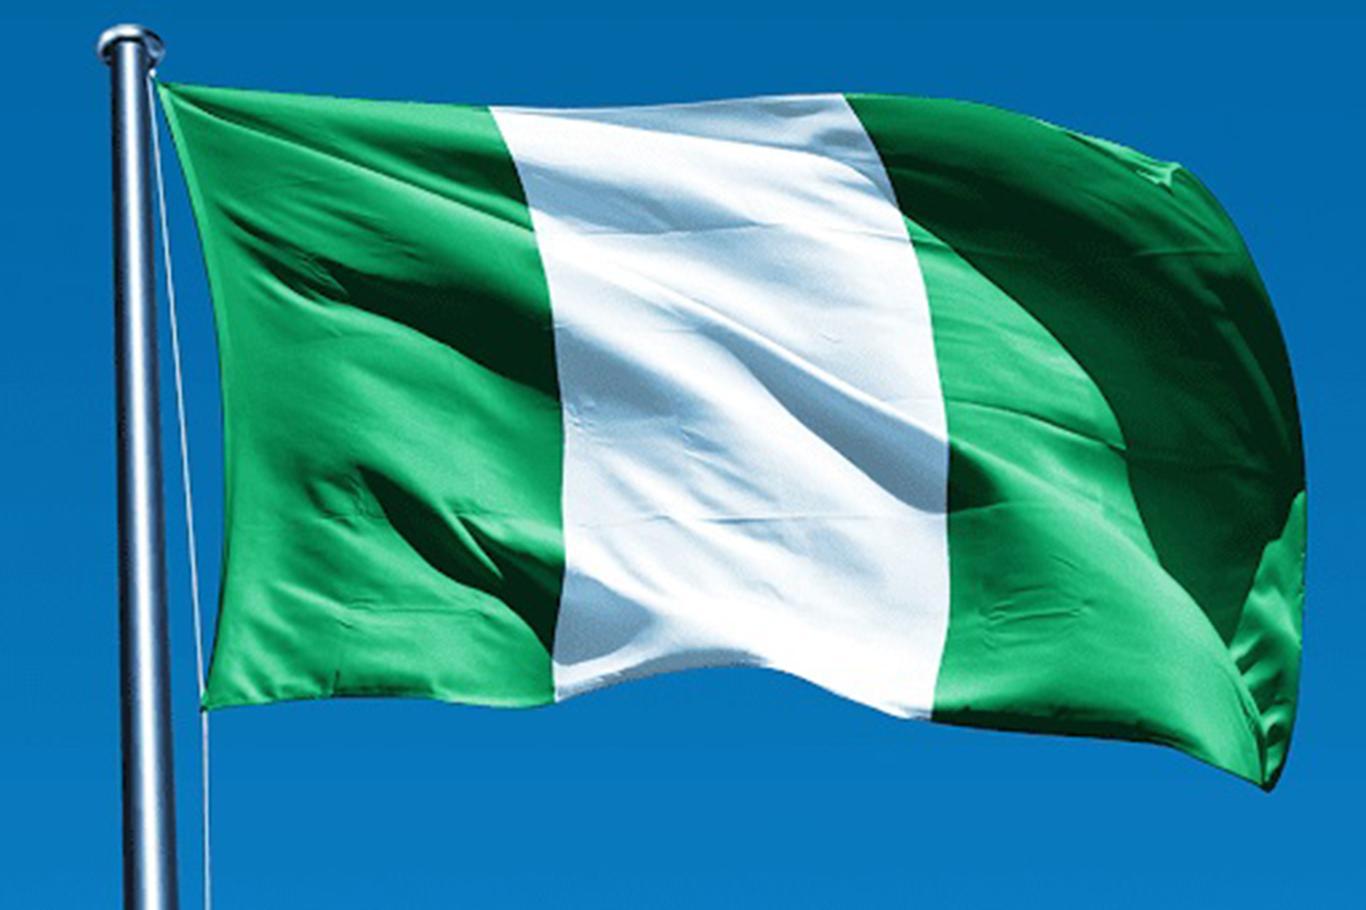 Bus crash in Nigeria: 18 dead